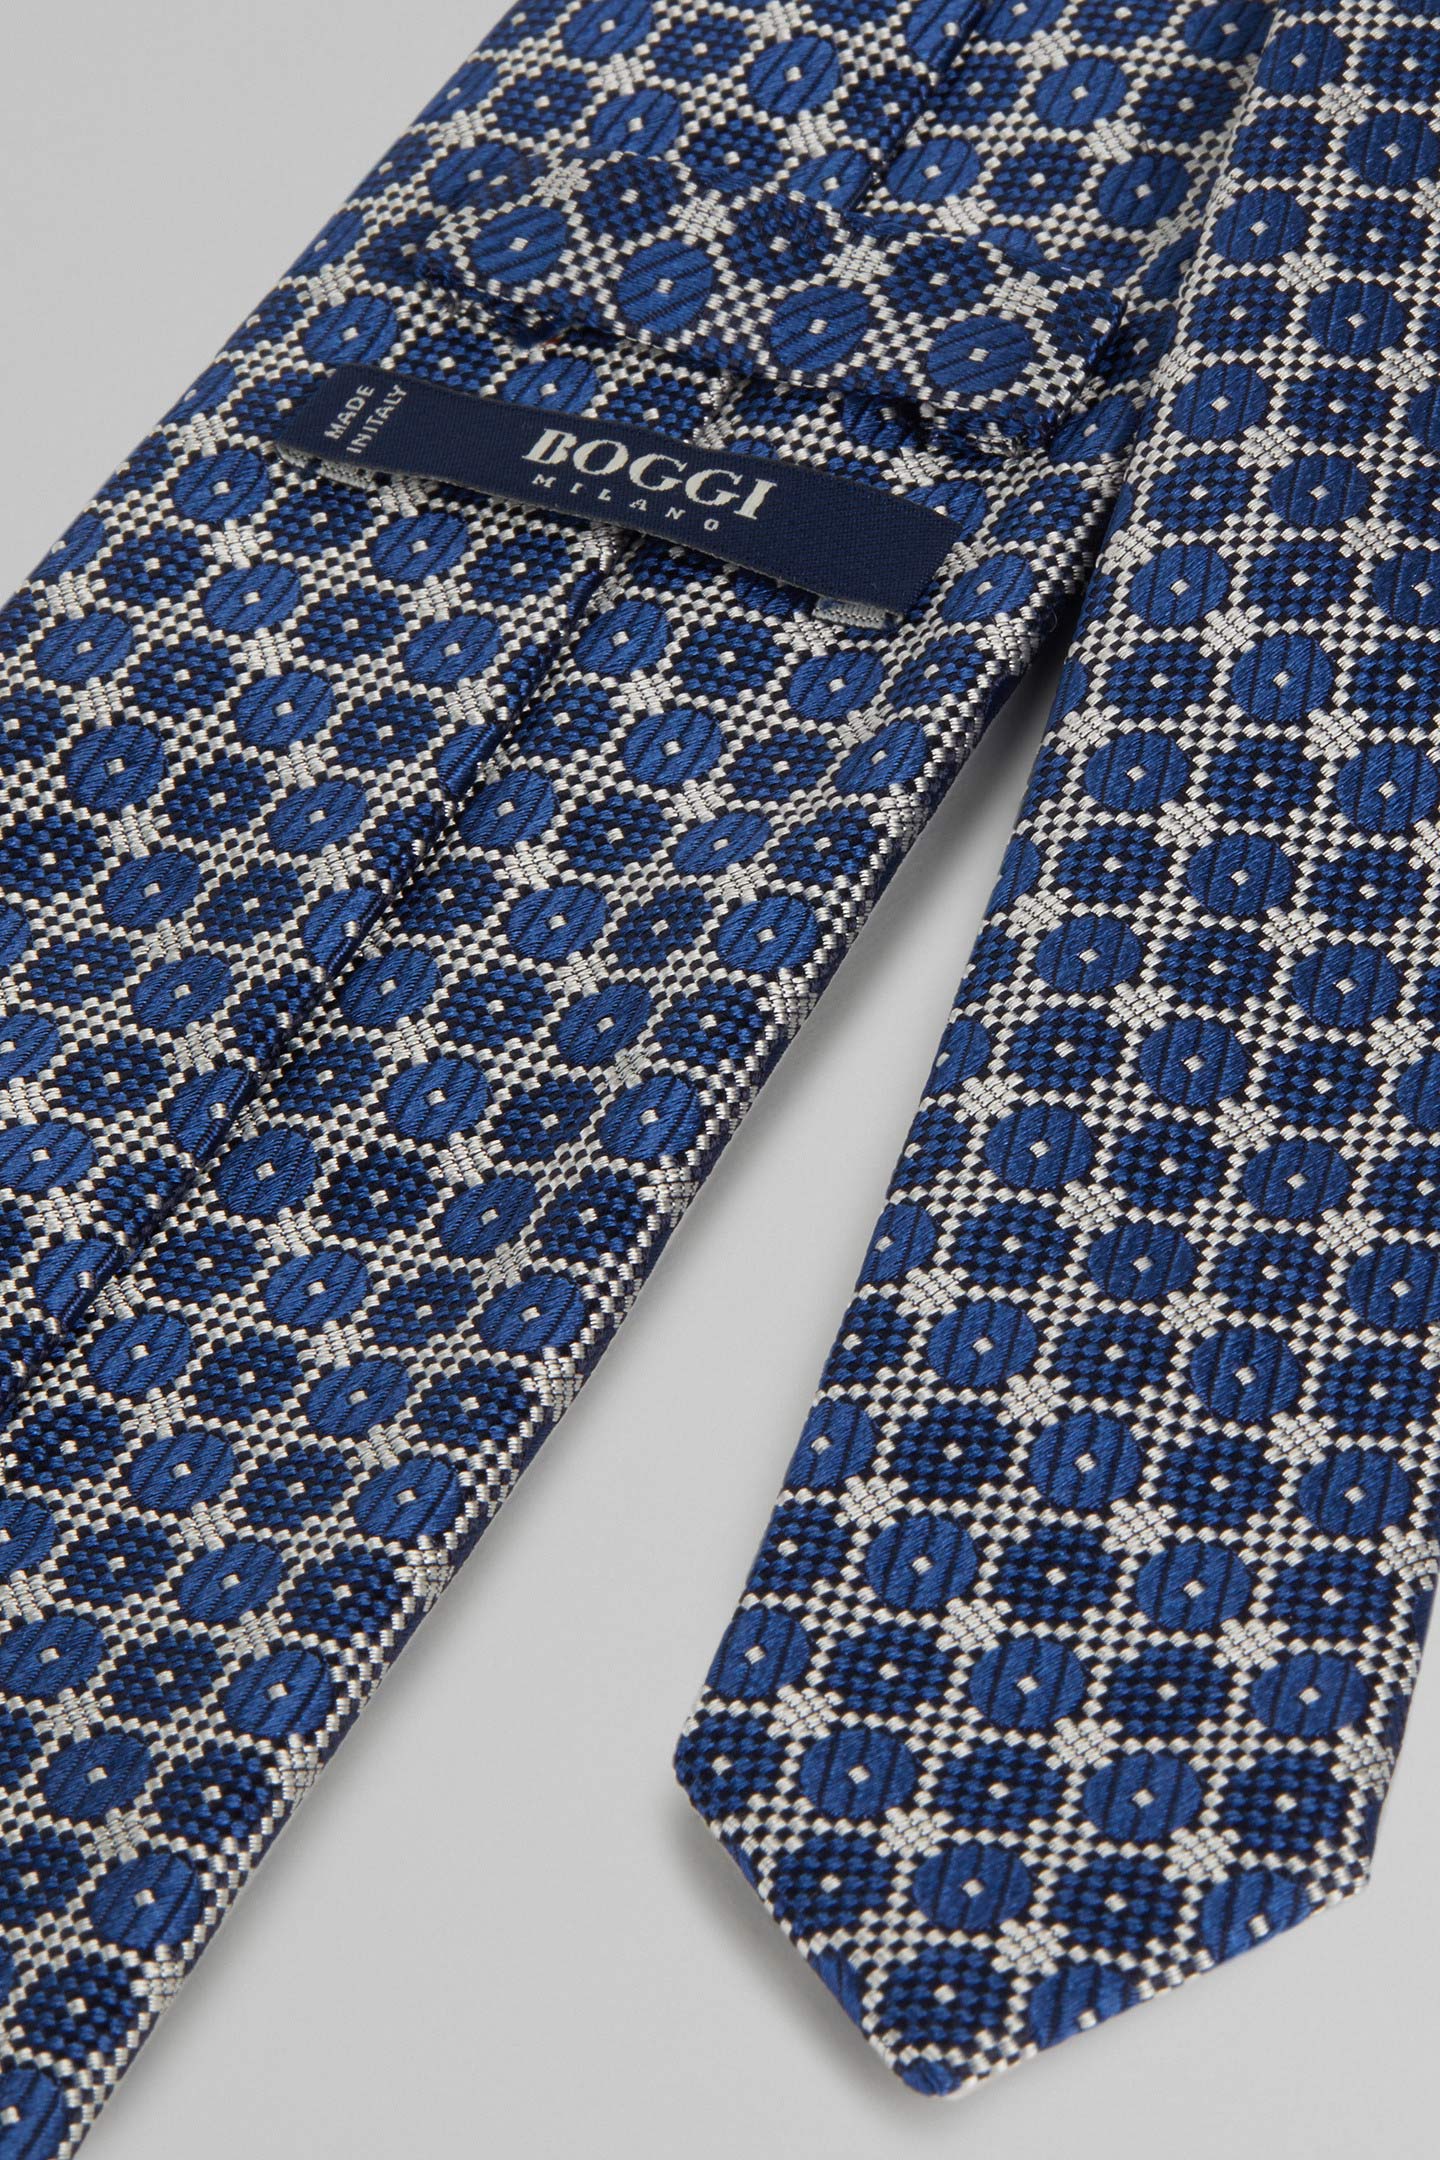 Men's Silk Jacquard Tie | Boggi Milano